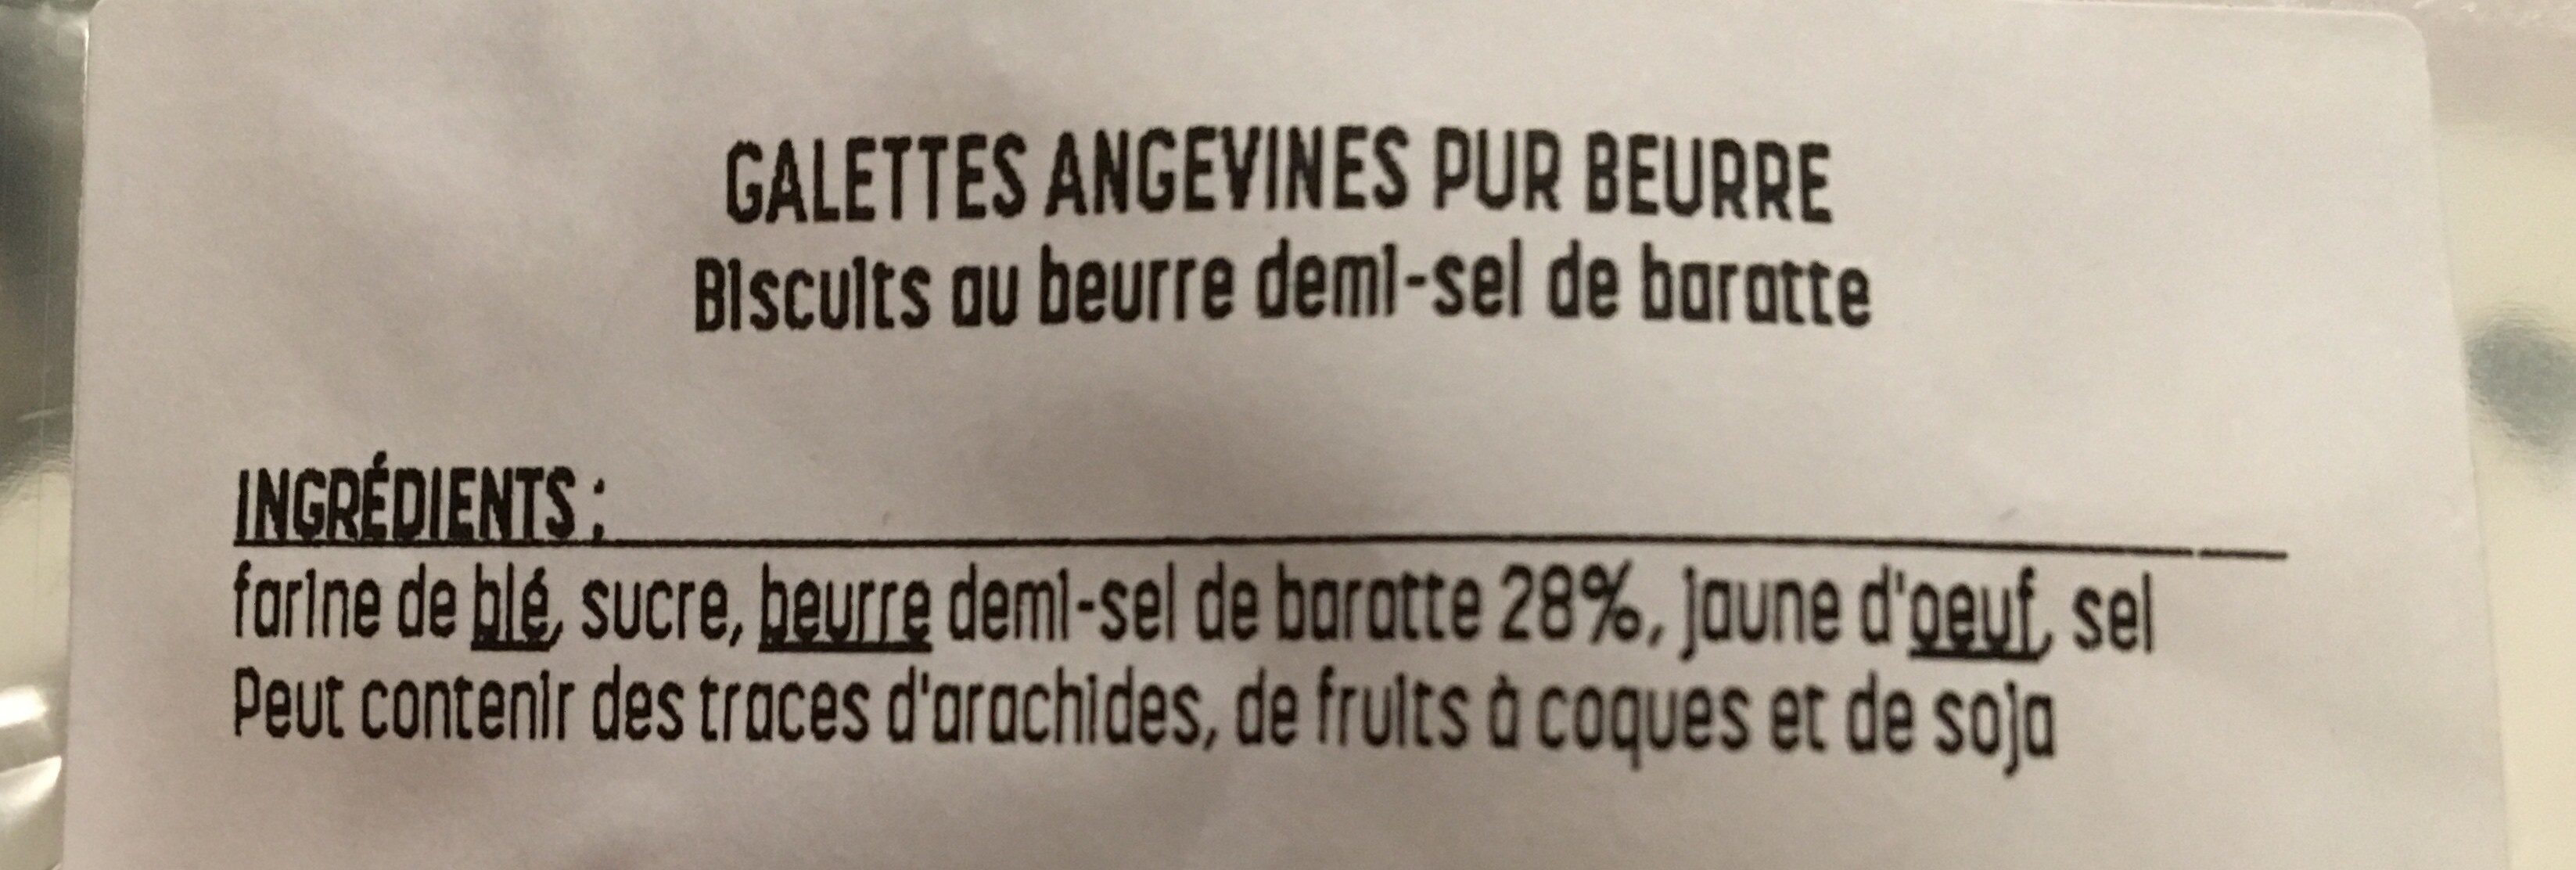 Galettes angevines pure beurre - Ingrédients